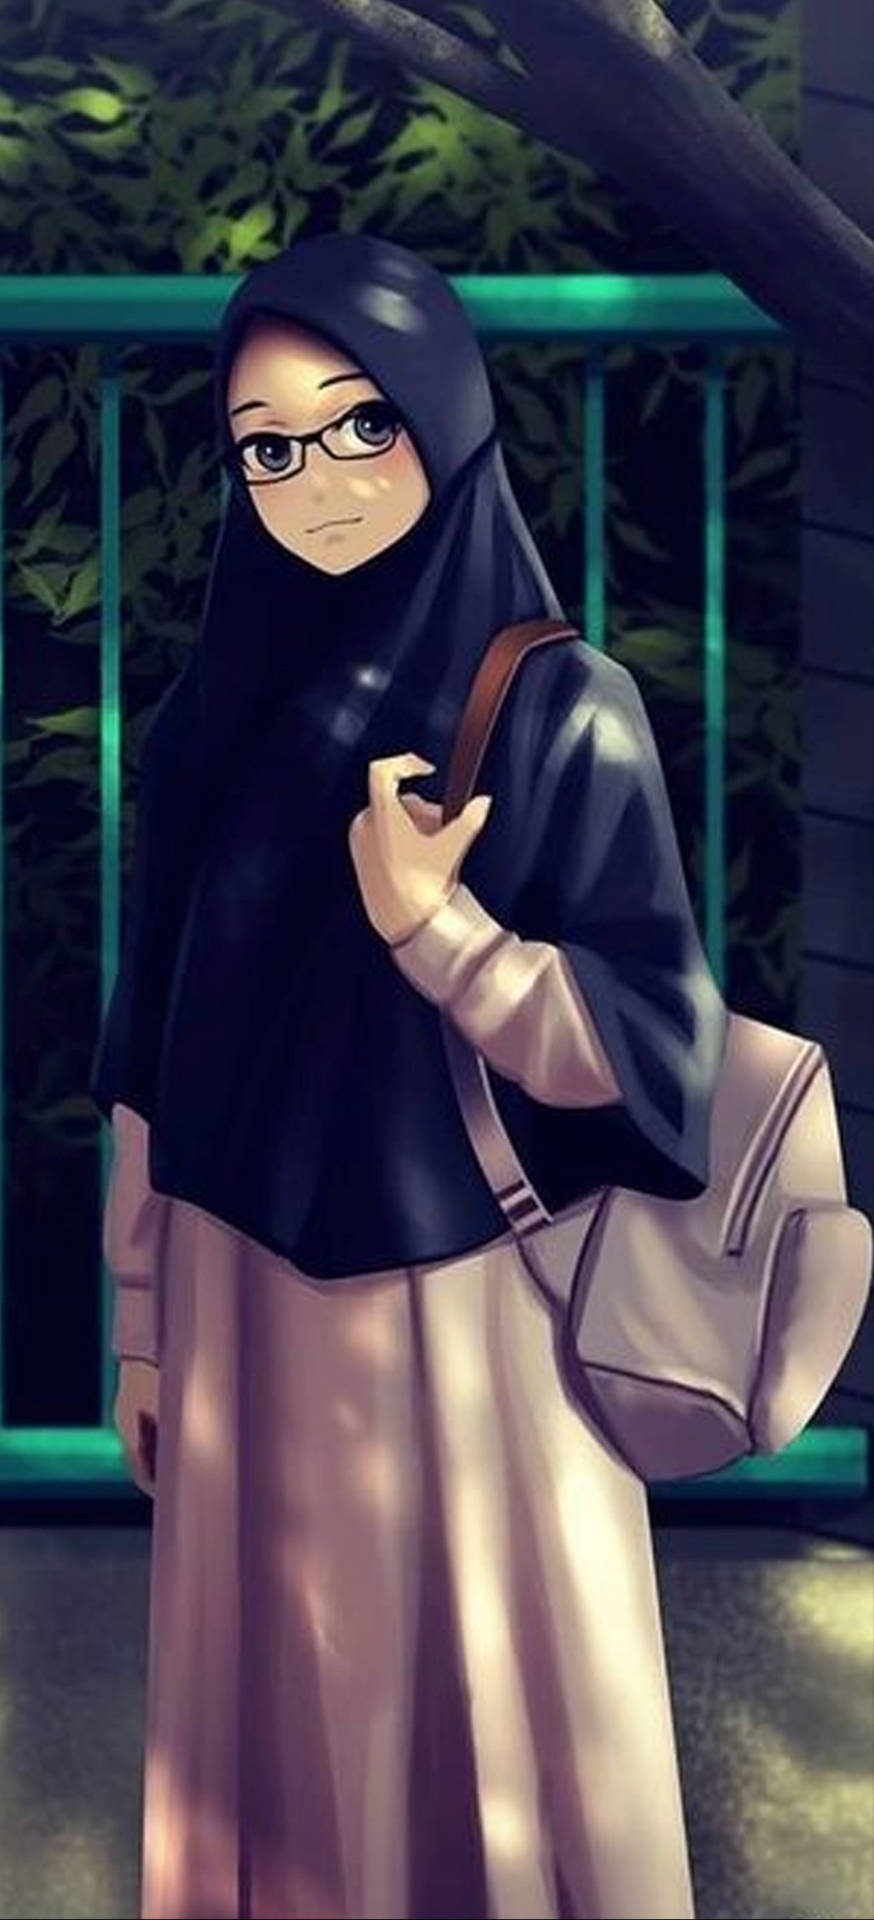 Hijab Cartoon Girl Bagpack Wallpaper